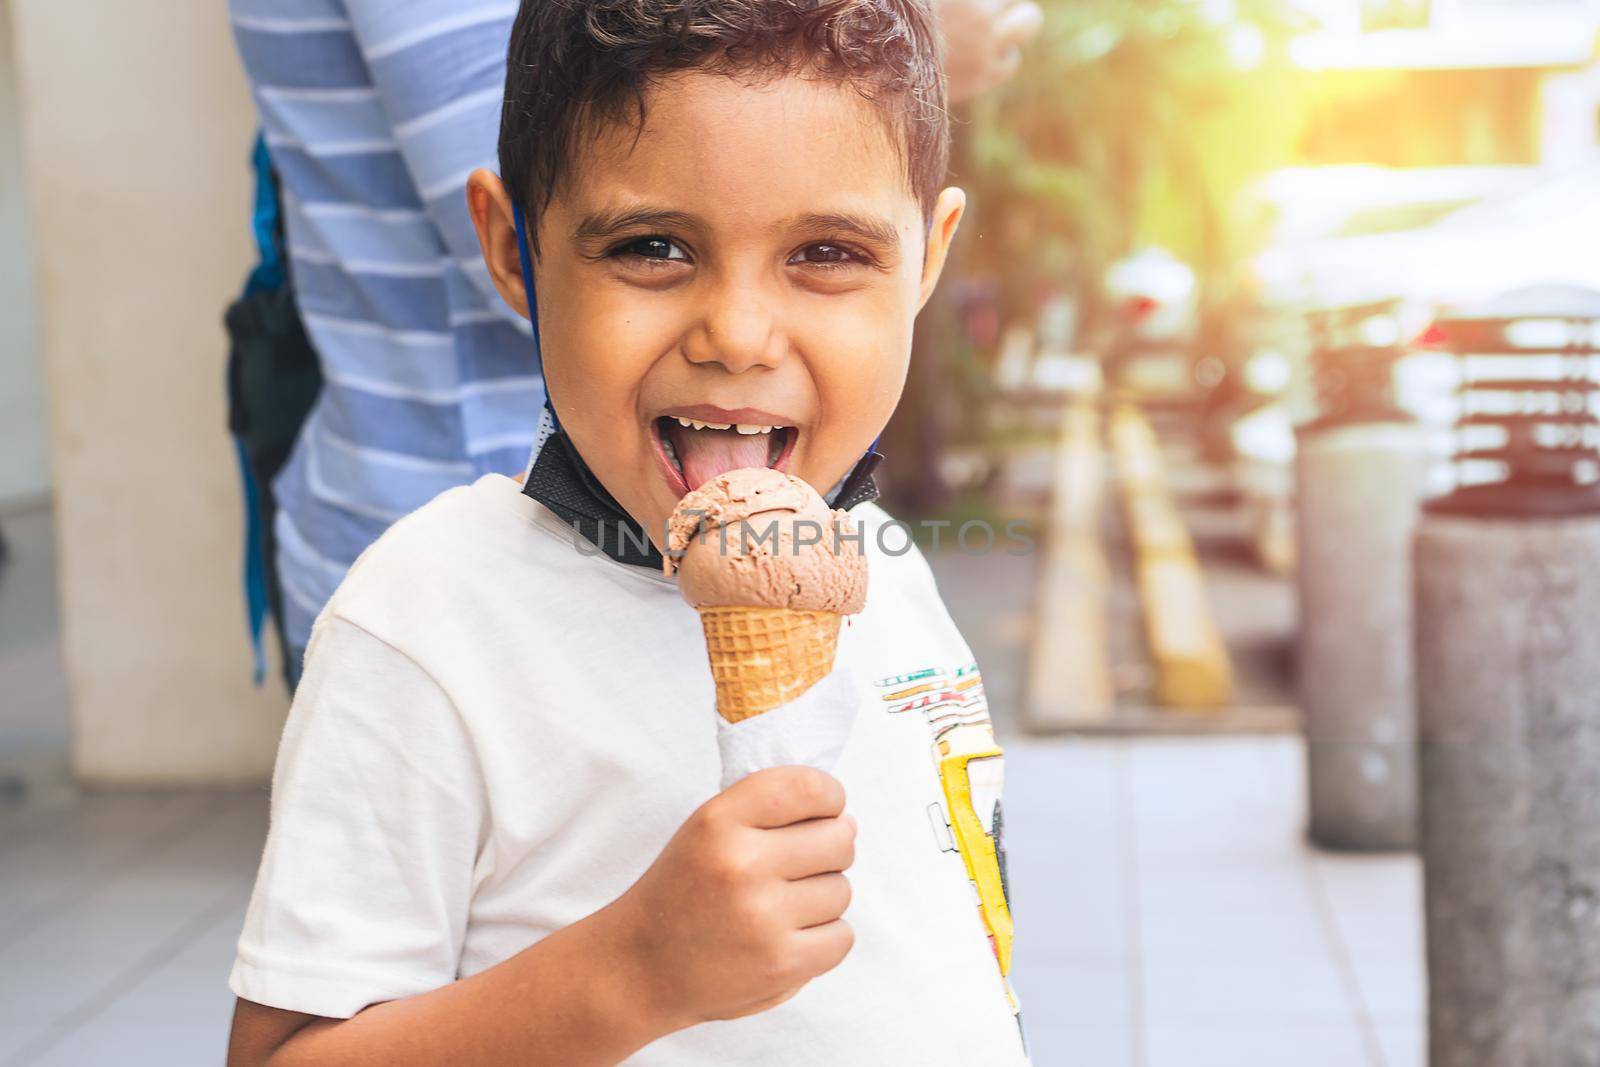 Latin boy with mischievous face enjoying an ice cream during the summer break in a shopping center by cfalvarez